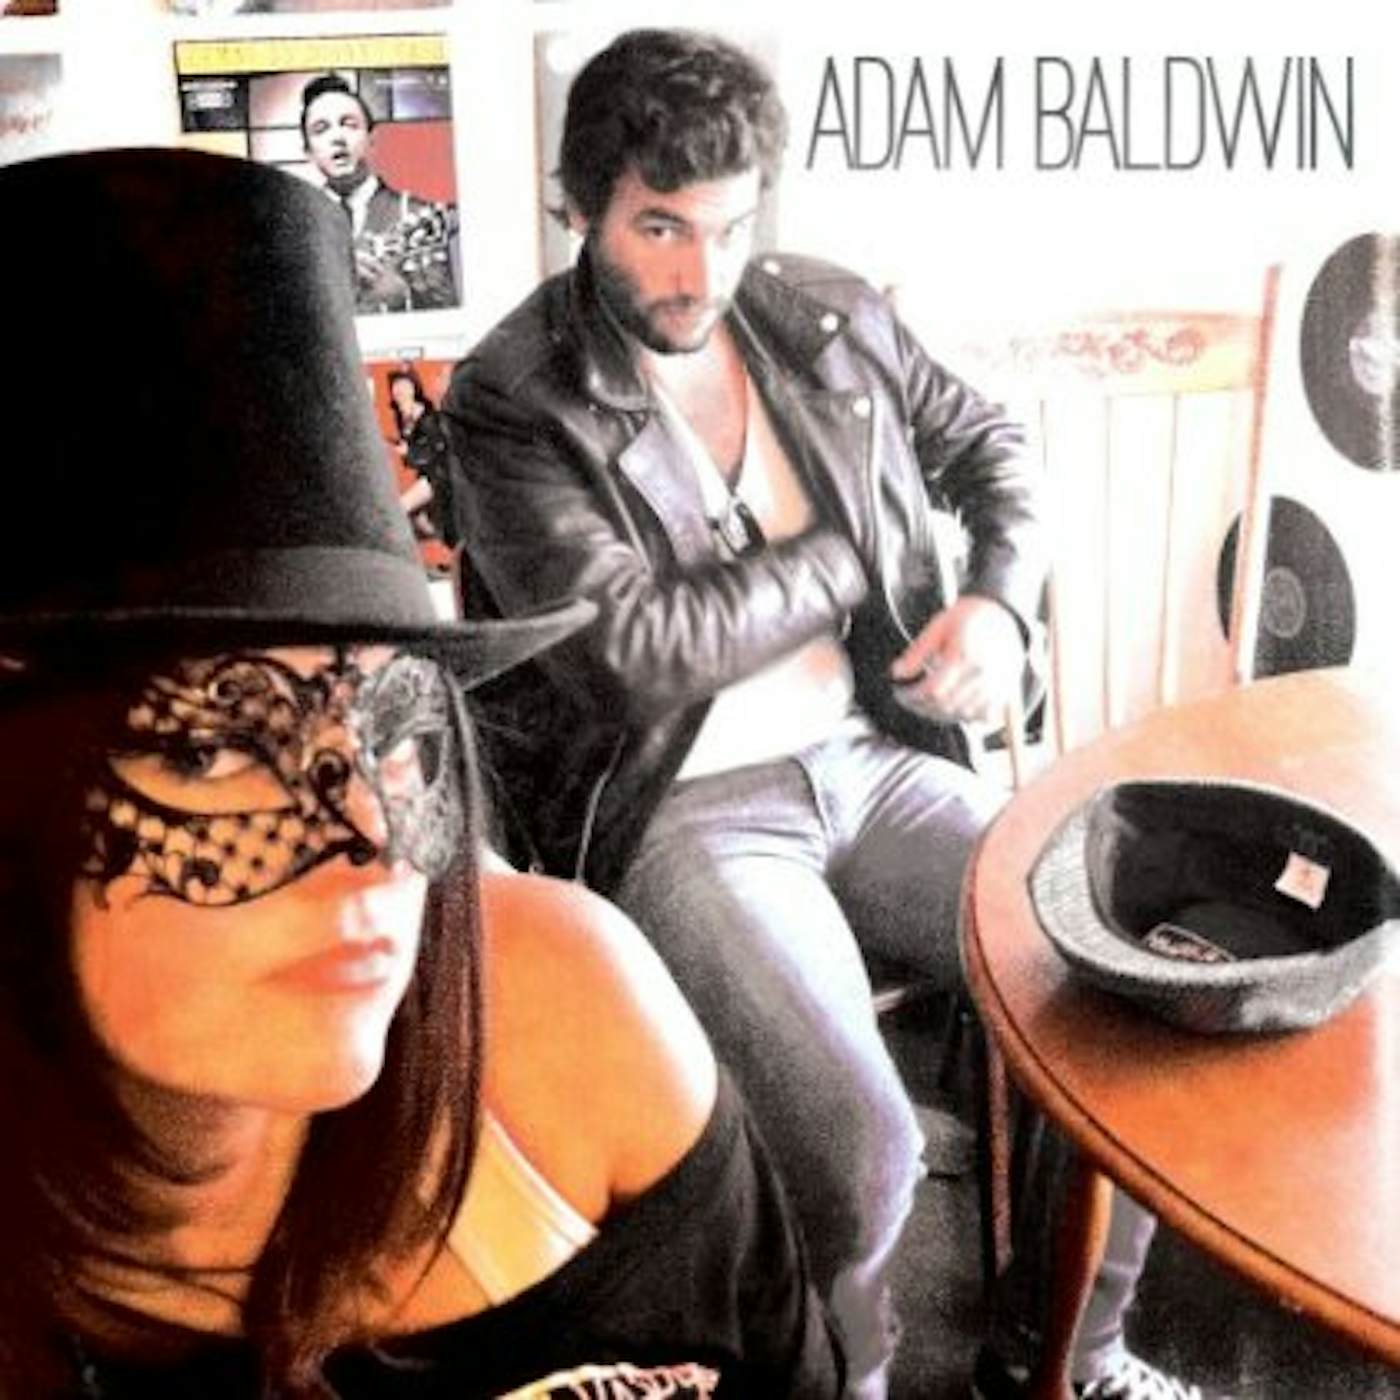 ADAM BALDWIN (CDEP) CD